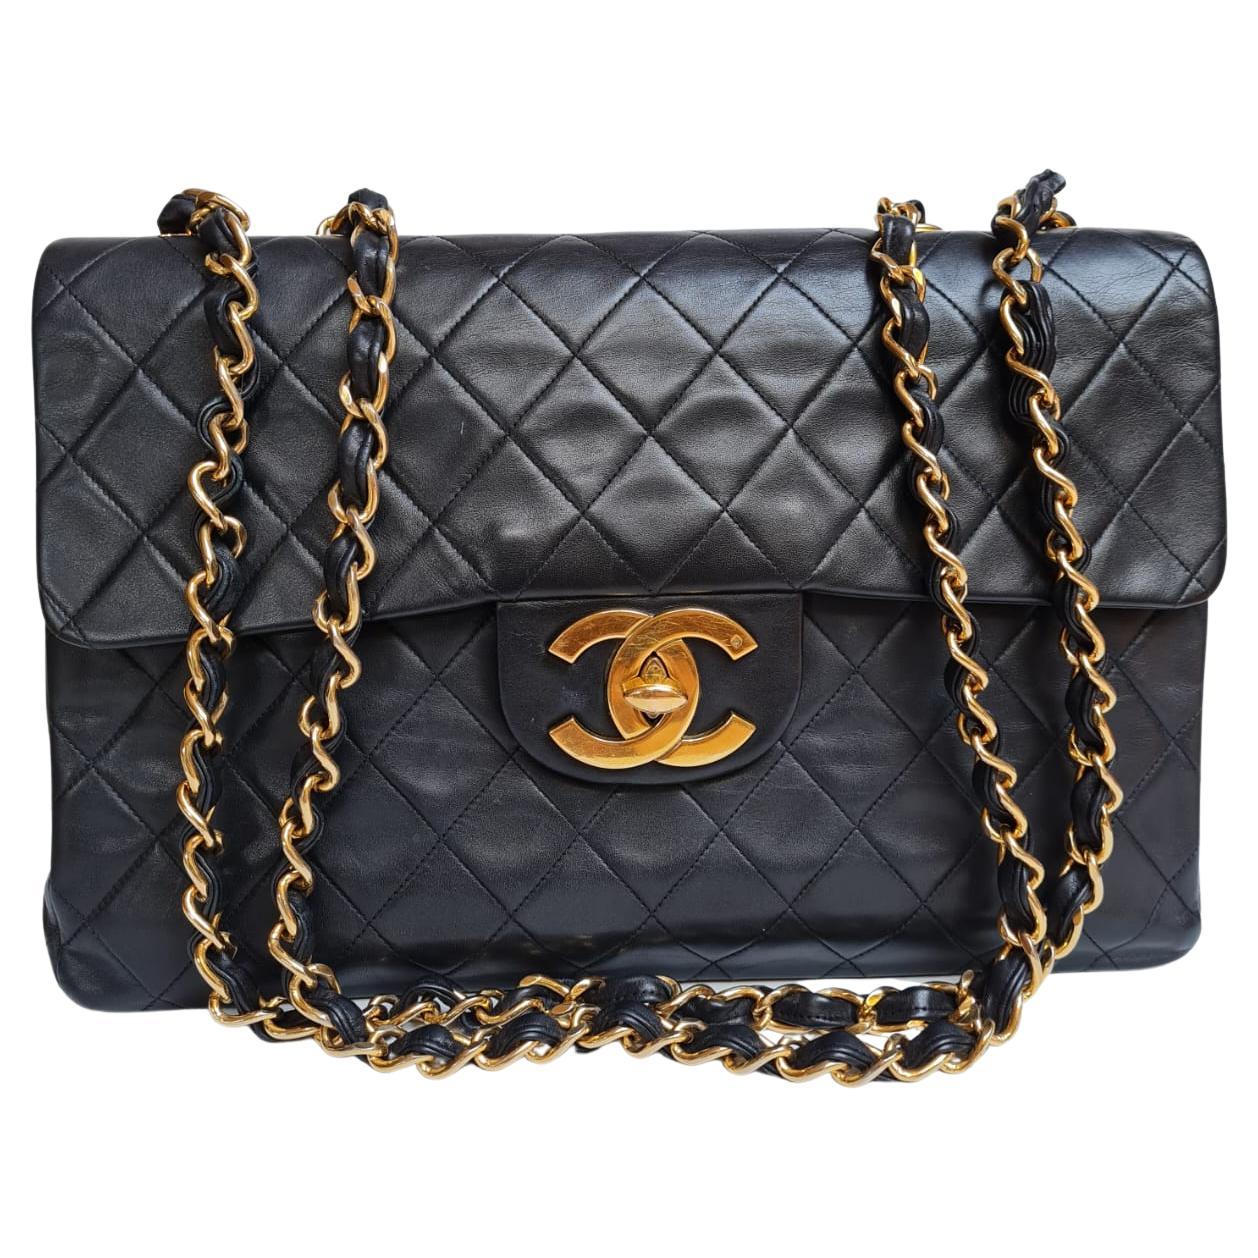 1990s Chanel Black Lambskin Leather Maxi Flap Bag